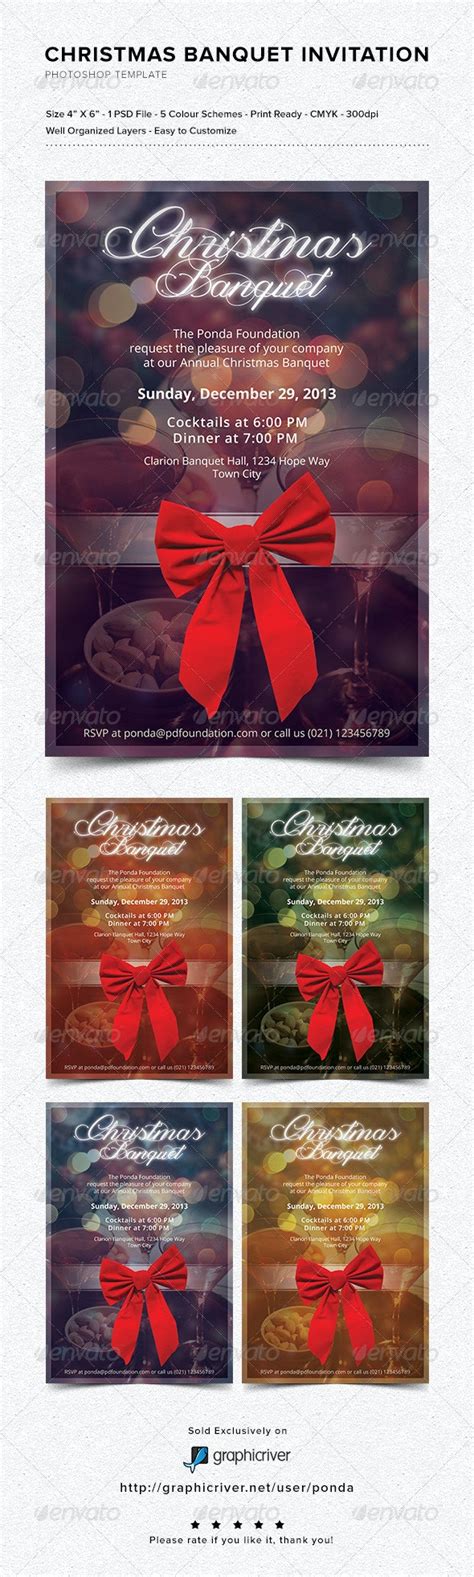 Christmas Banquet Invitation Print Templates Graphicriver